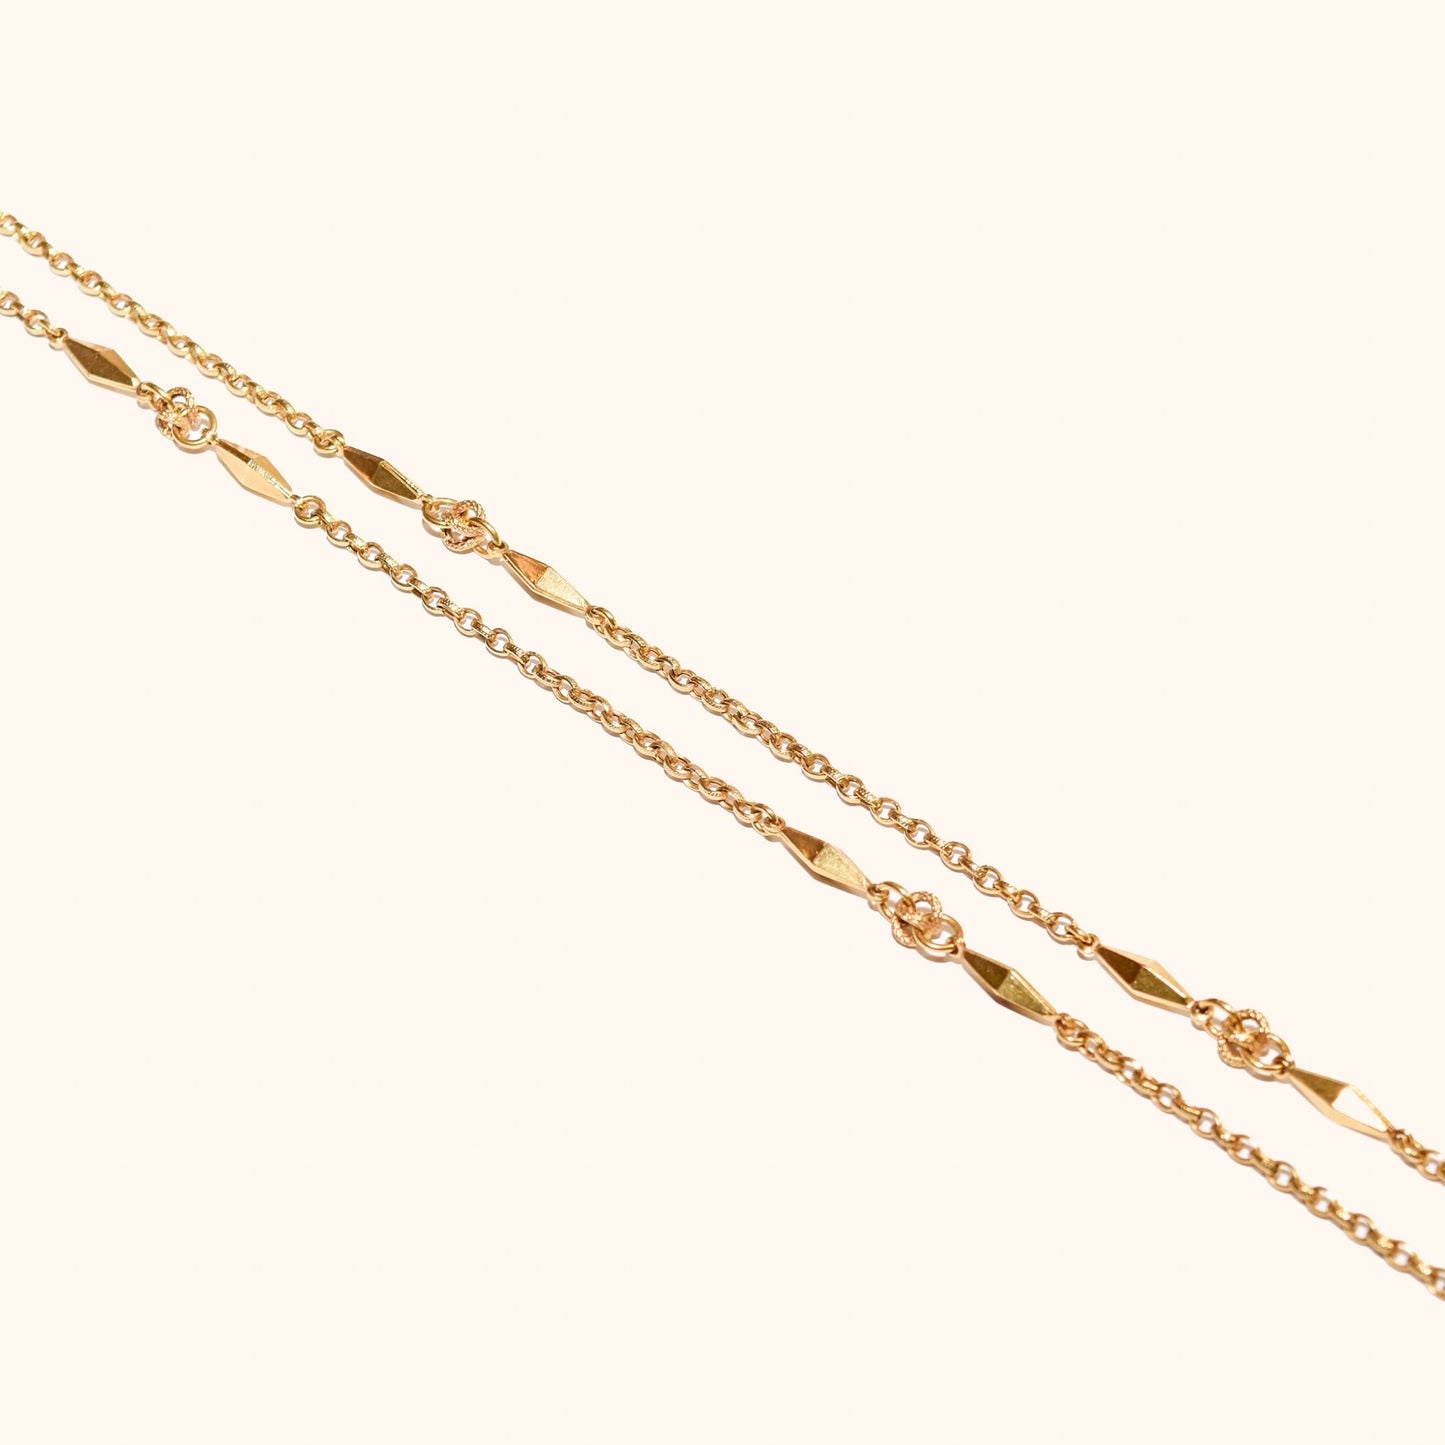 MCM 18K Yellow Gold Chain Link Opera Necklace, Geometric Beads, Estate Jewelry, 34.57" L